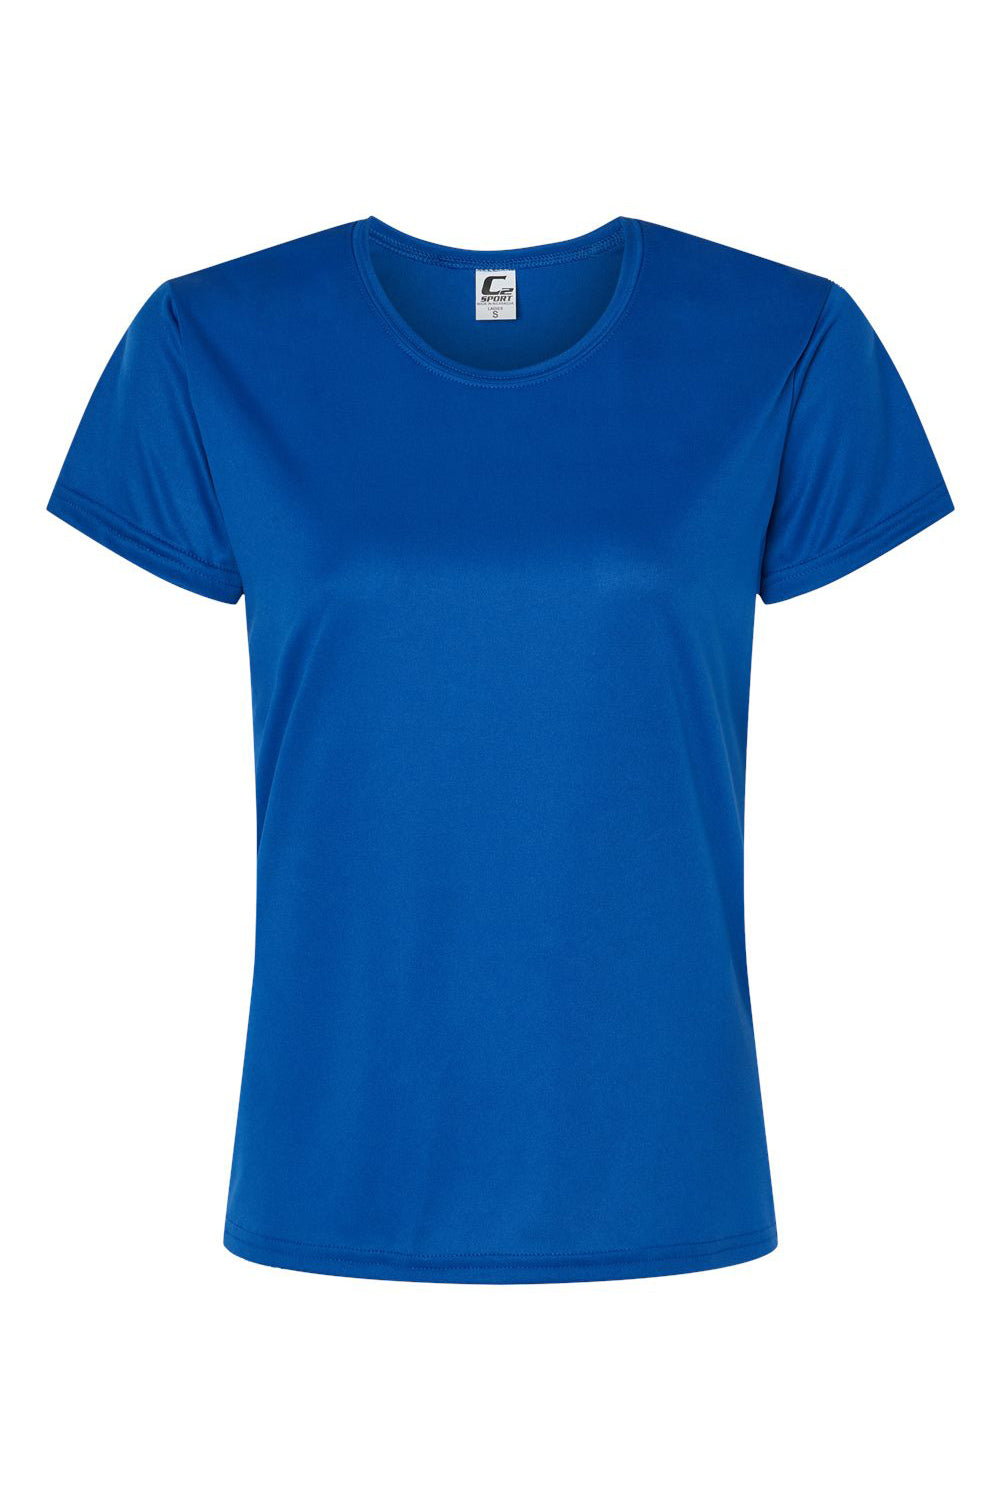 C2 Sport 5600 Womens Performance Moisture Wicking Short Sleeve Crewneck T-Shirt Royal Blue Flat Front